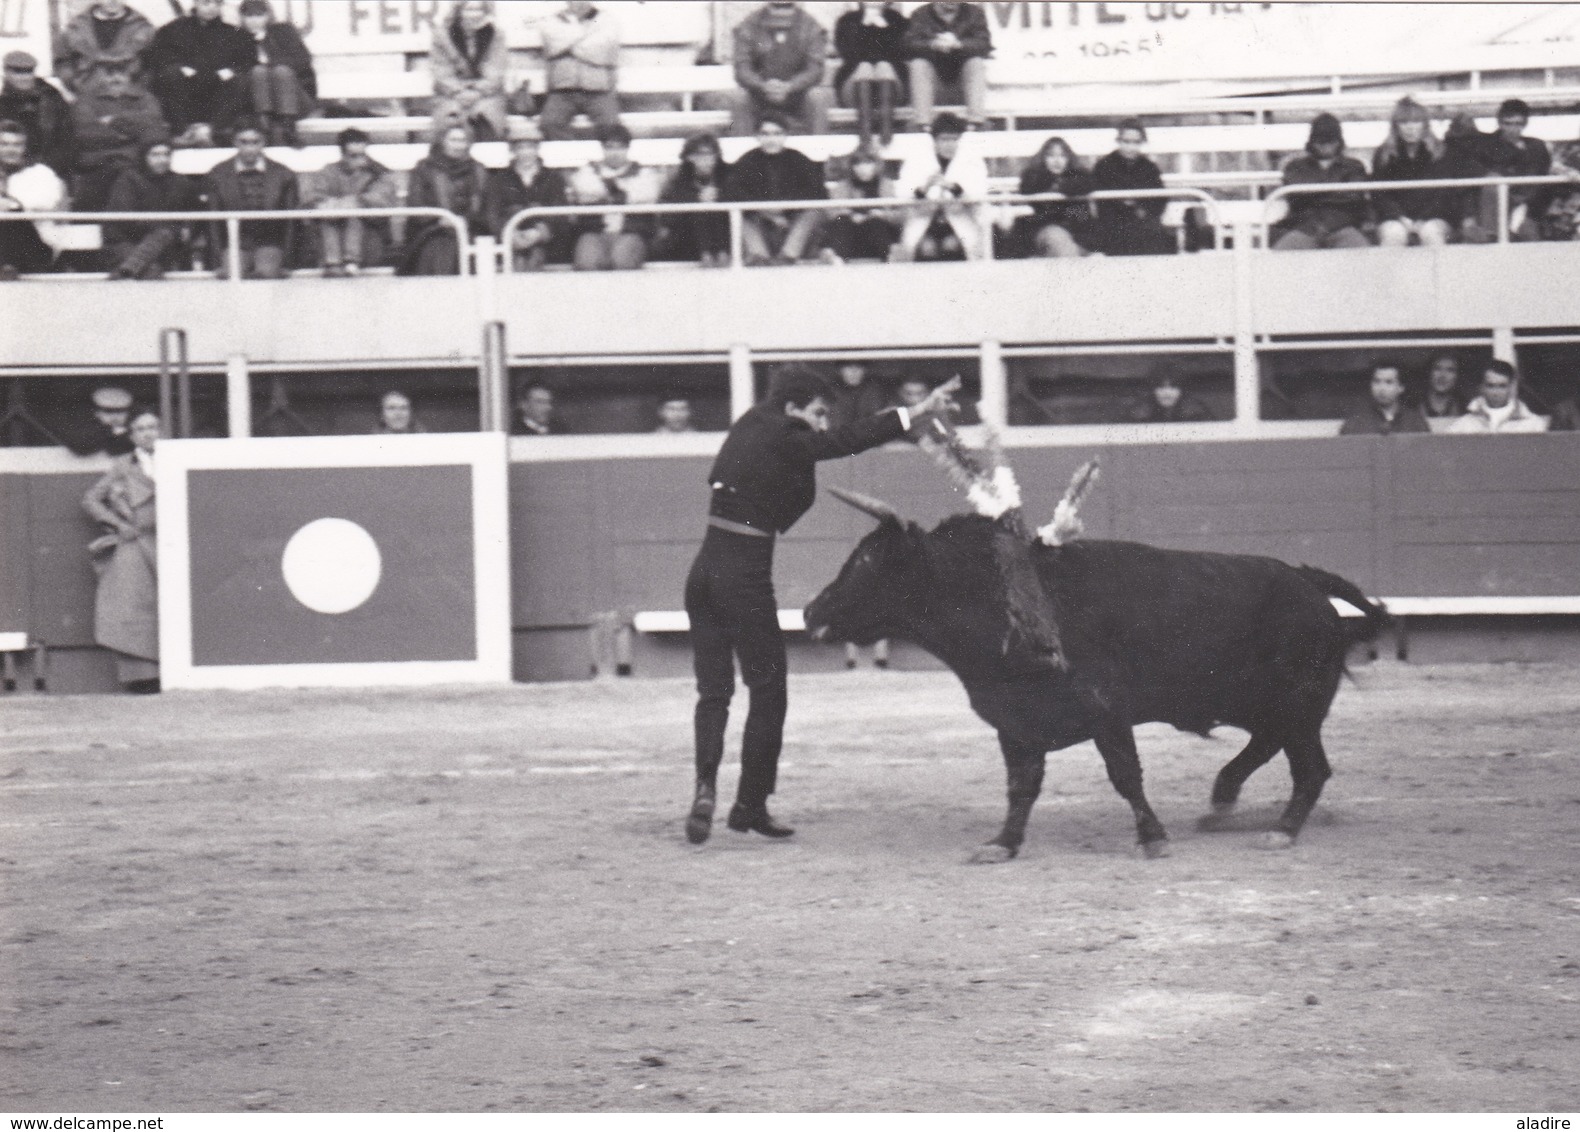 Collections de 93 photos NB et couleur CORRIDA DE TORO, course de taureau, TOREADOR, picador avec/sans mention au verso